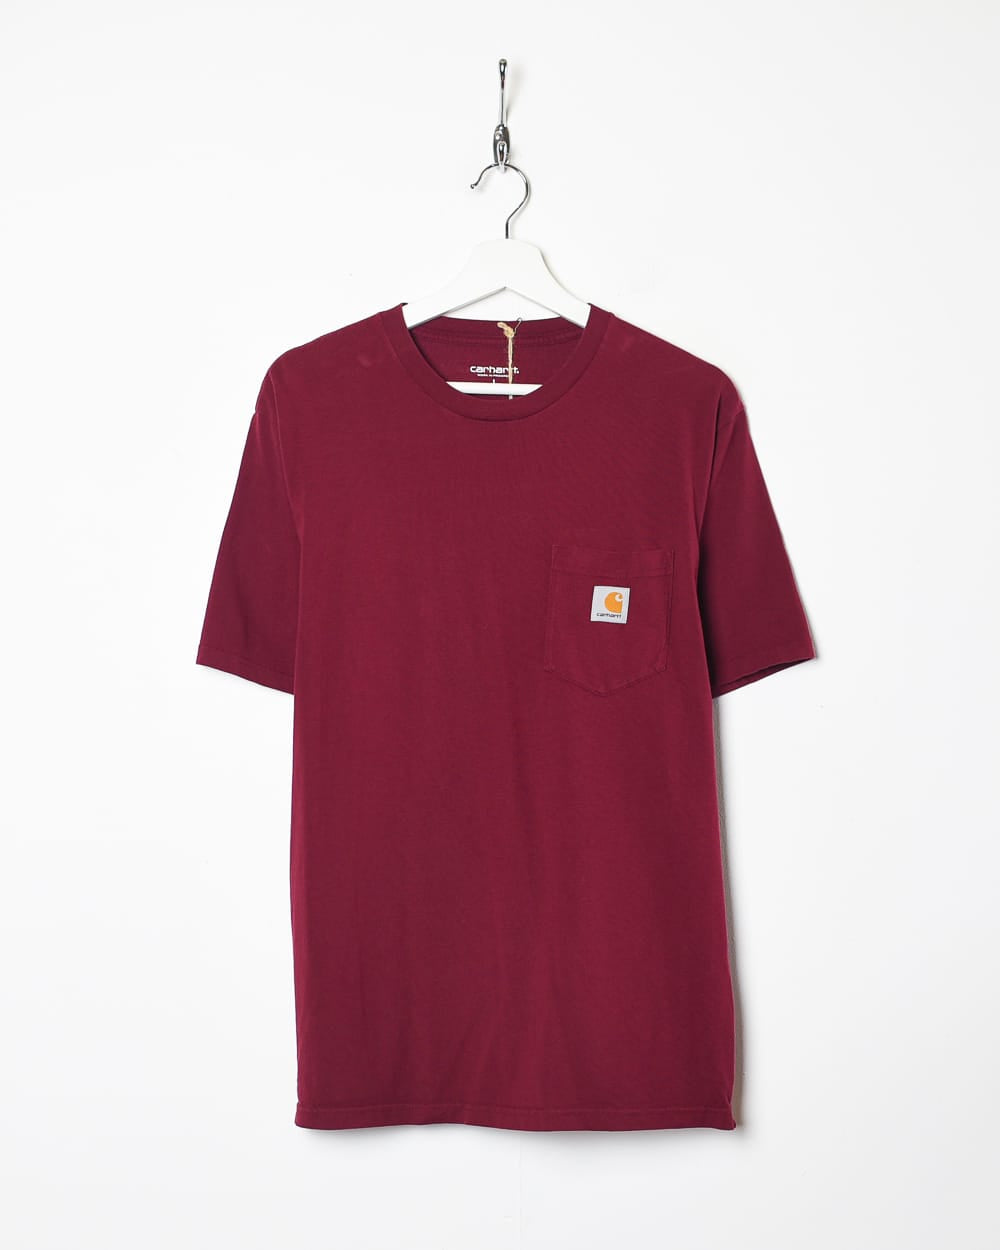 Maroon Carhartt Pocket T-Shirt - Large